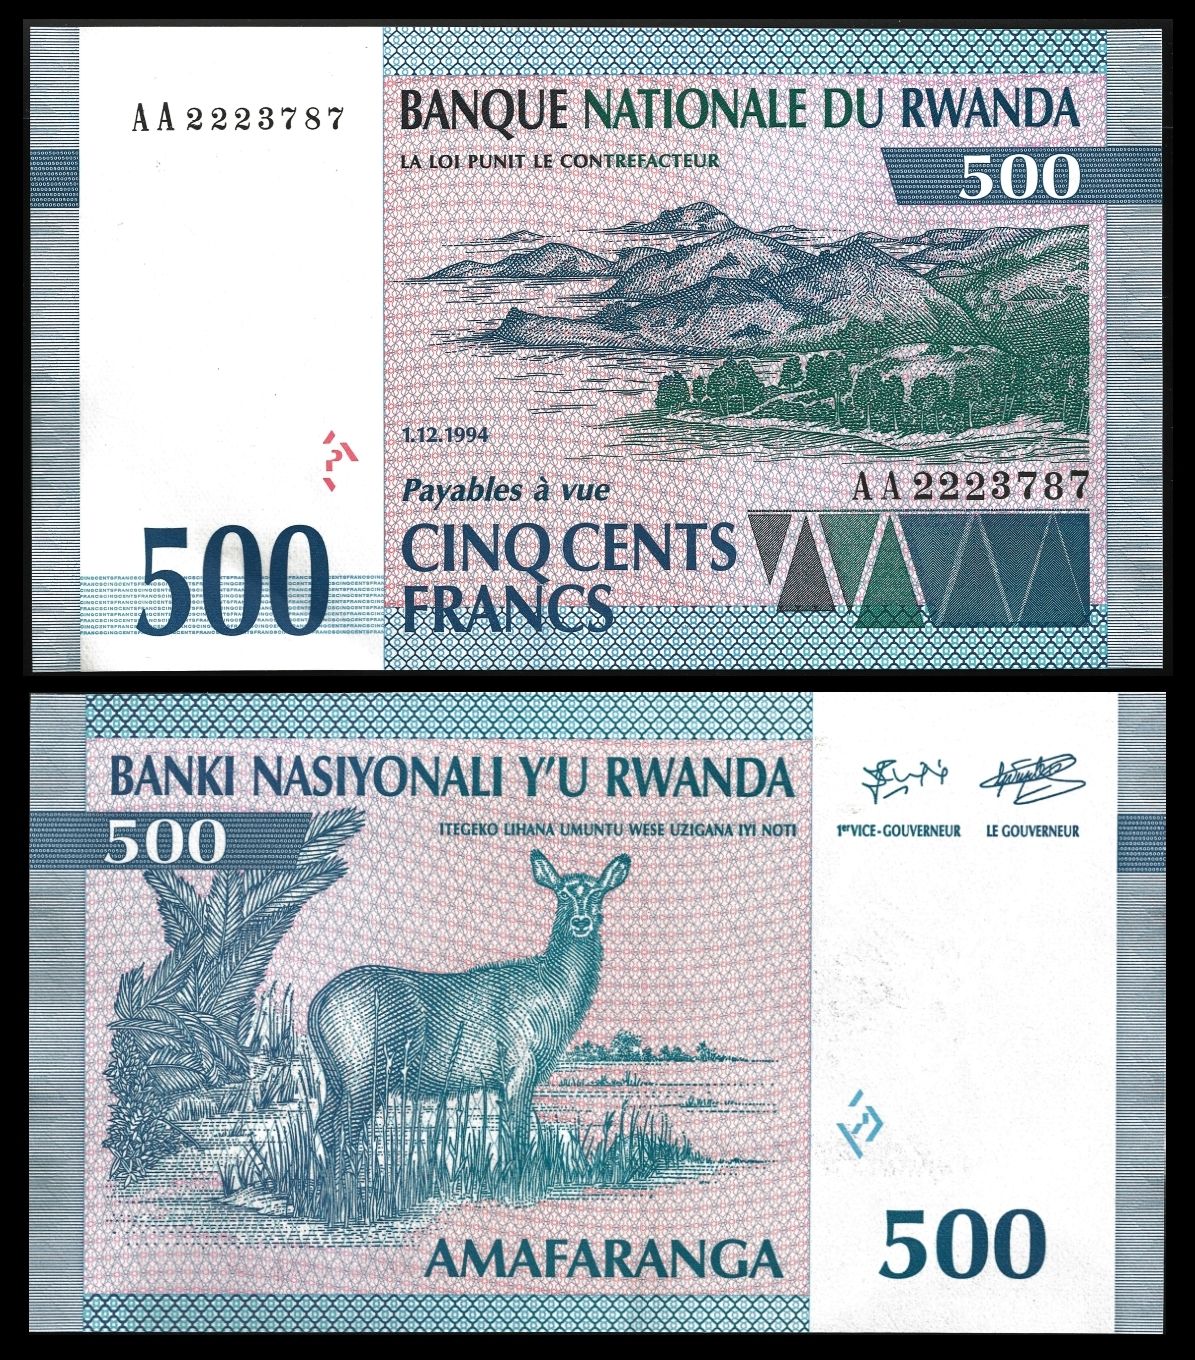 500 francs Rwanda 1994